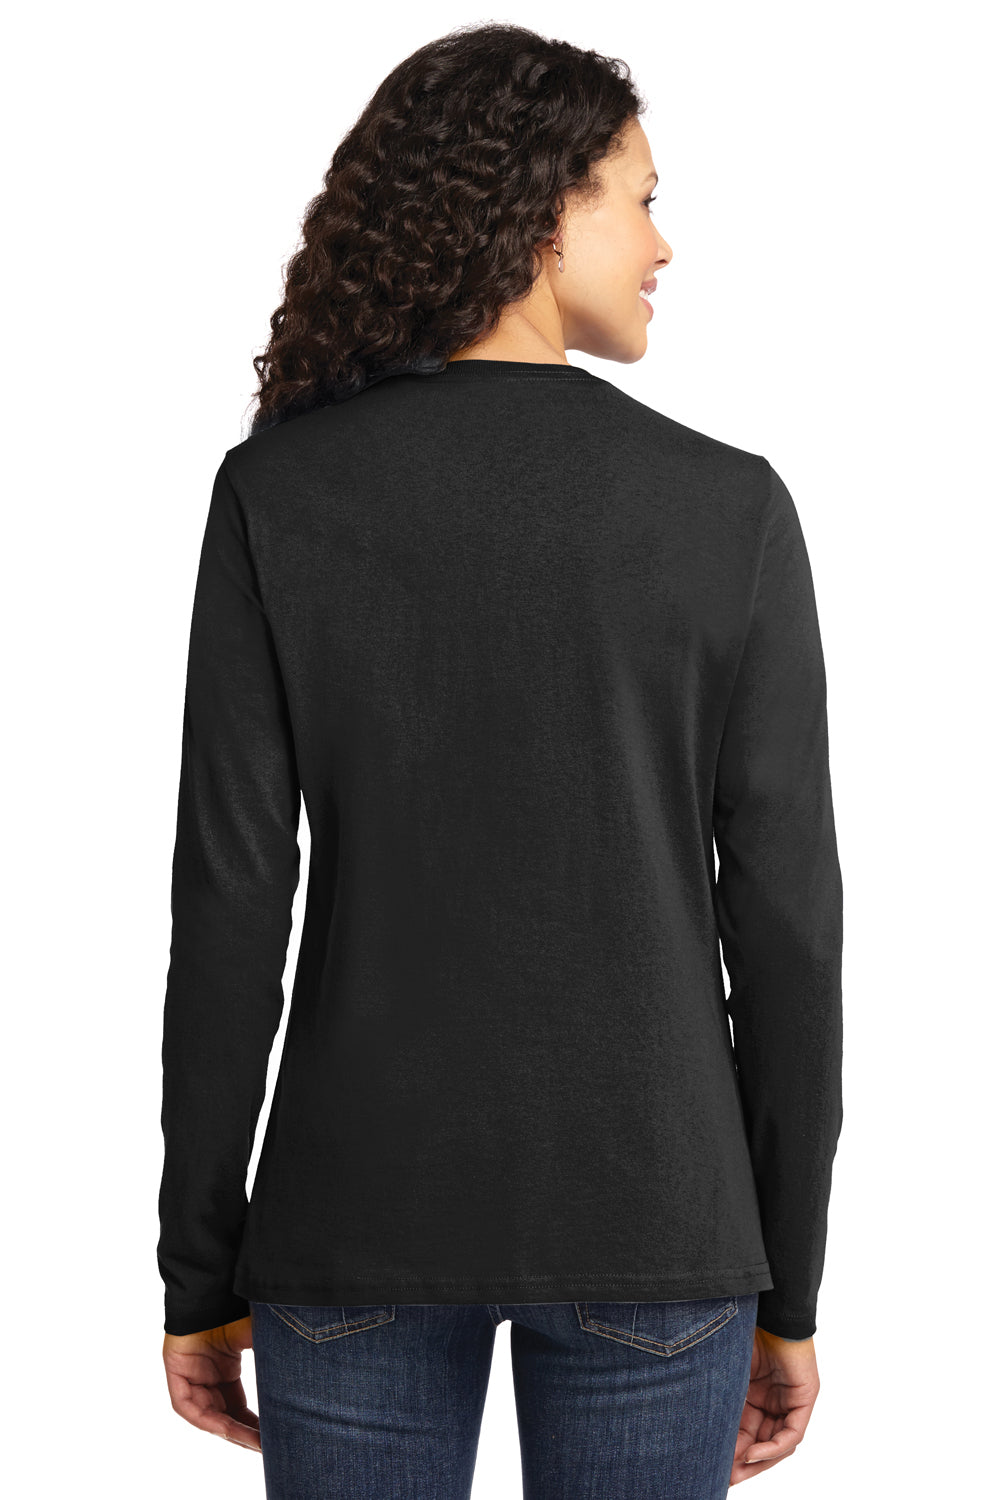 Port & Company LPC54LS Womens Core Long Sleeve Crewneck T-Shirt Black Back